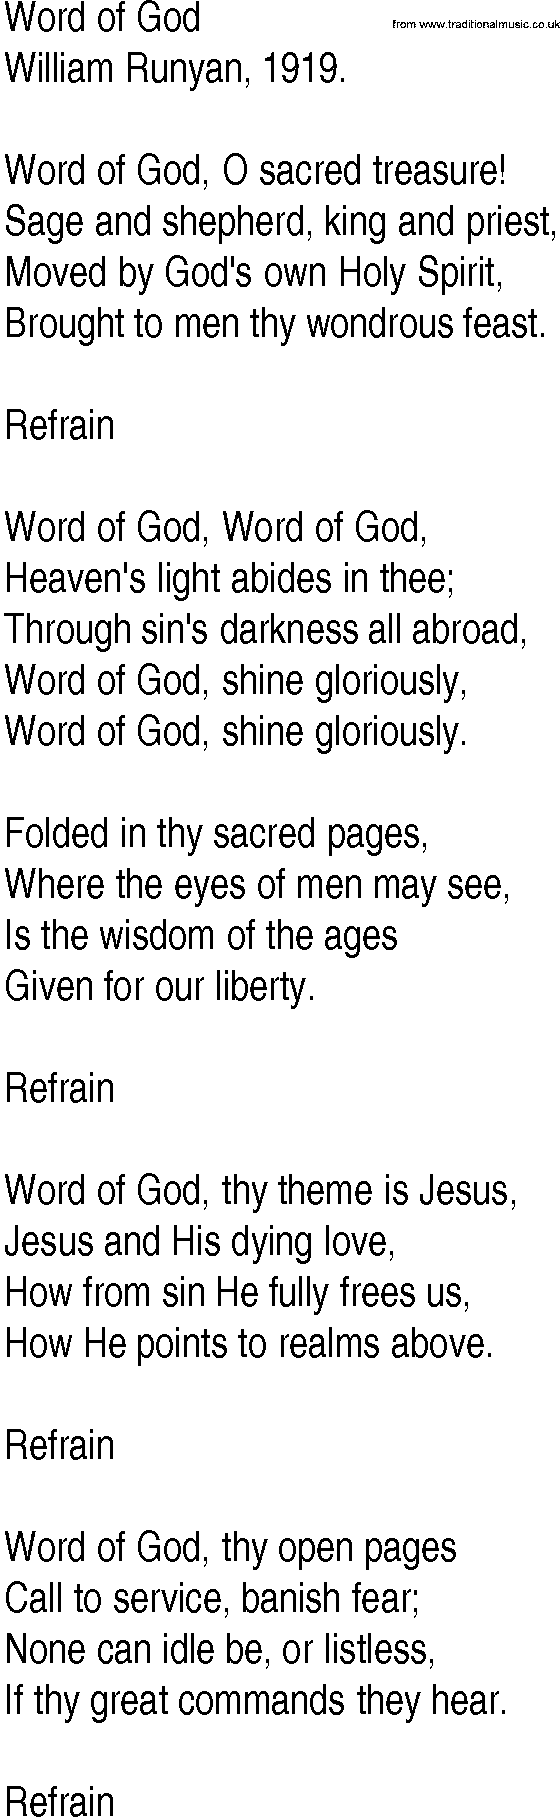 Hymn and Gospel Song: Word of God by William Runyan lyrics